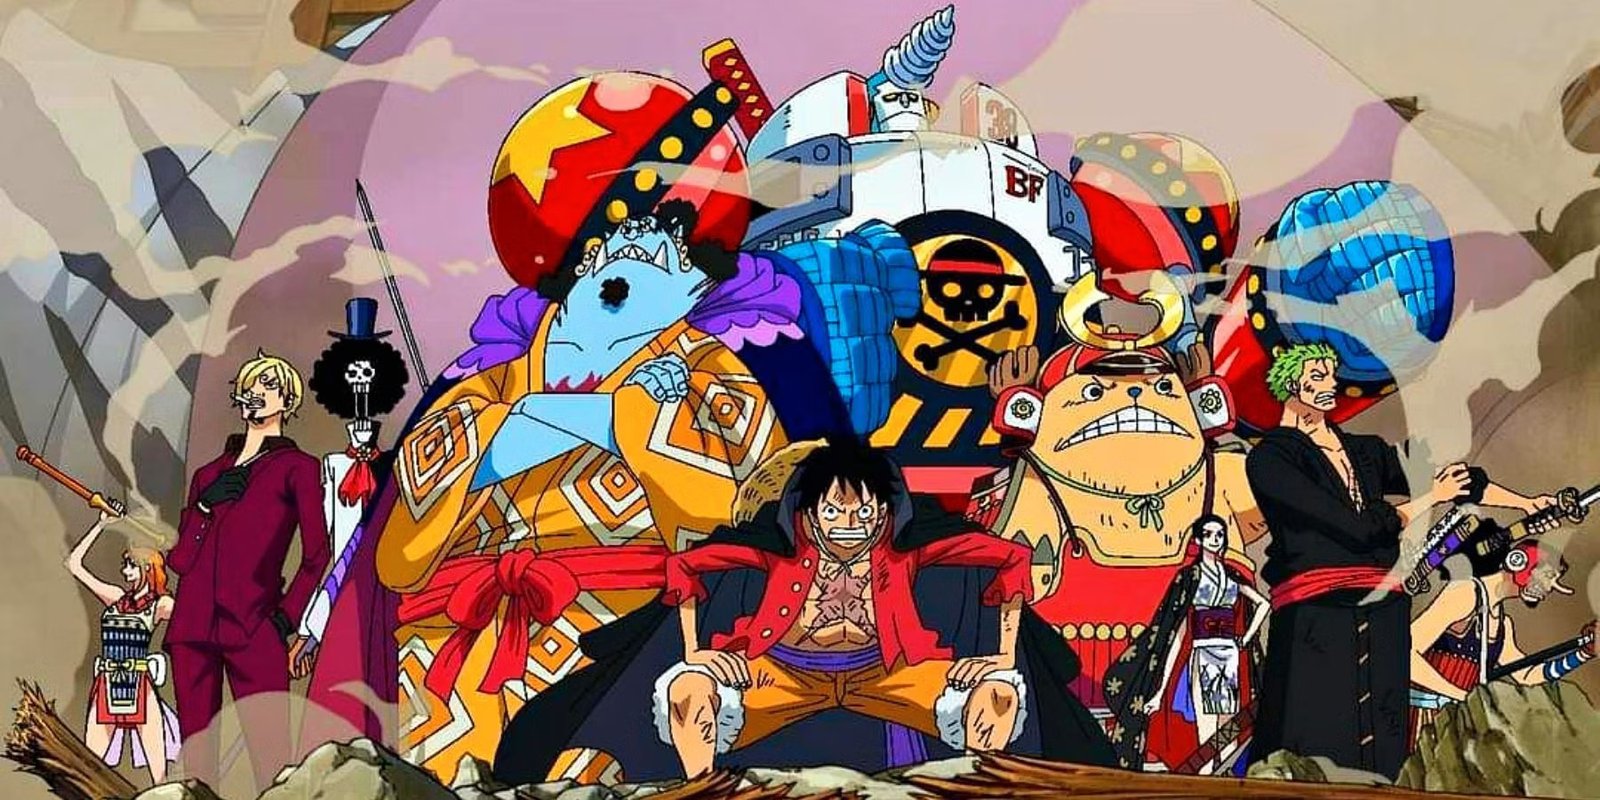 List of One Piece Manga Chapters 